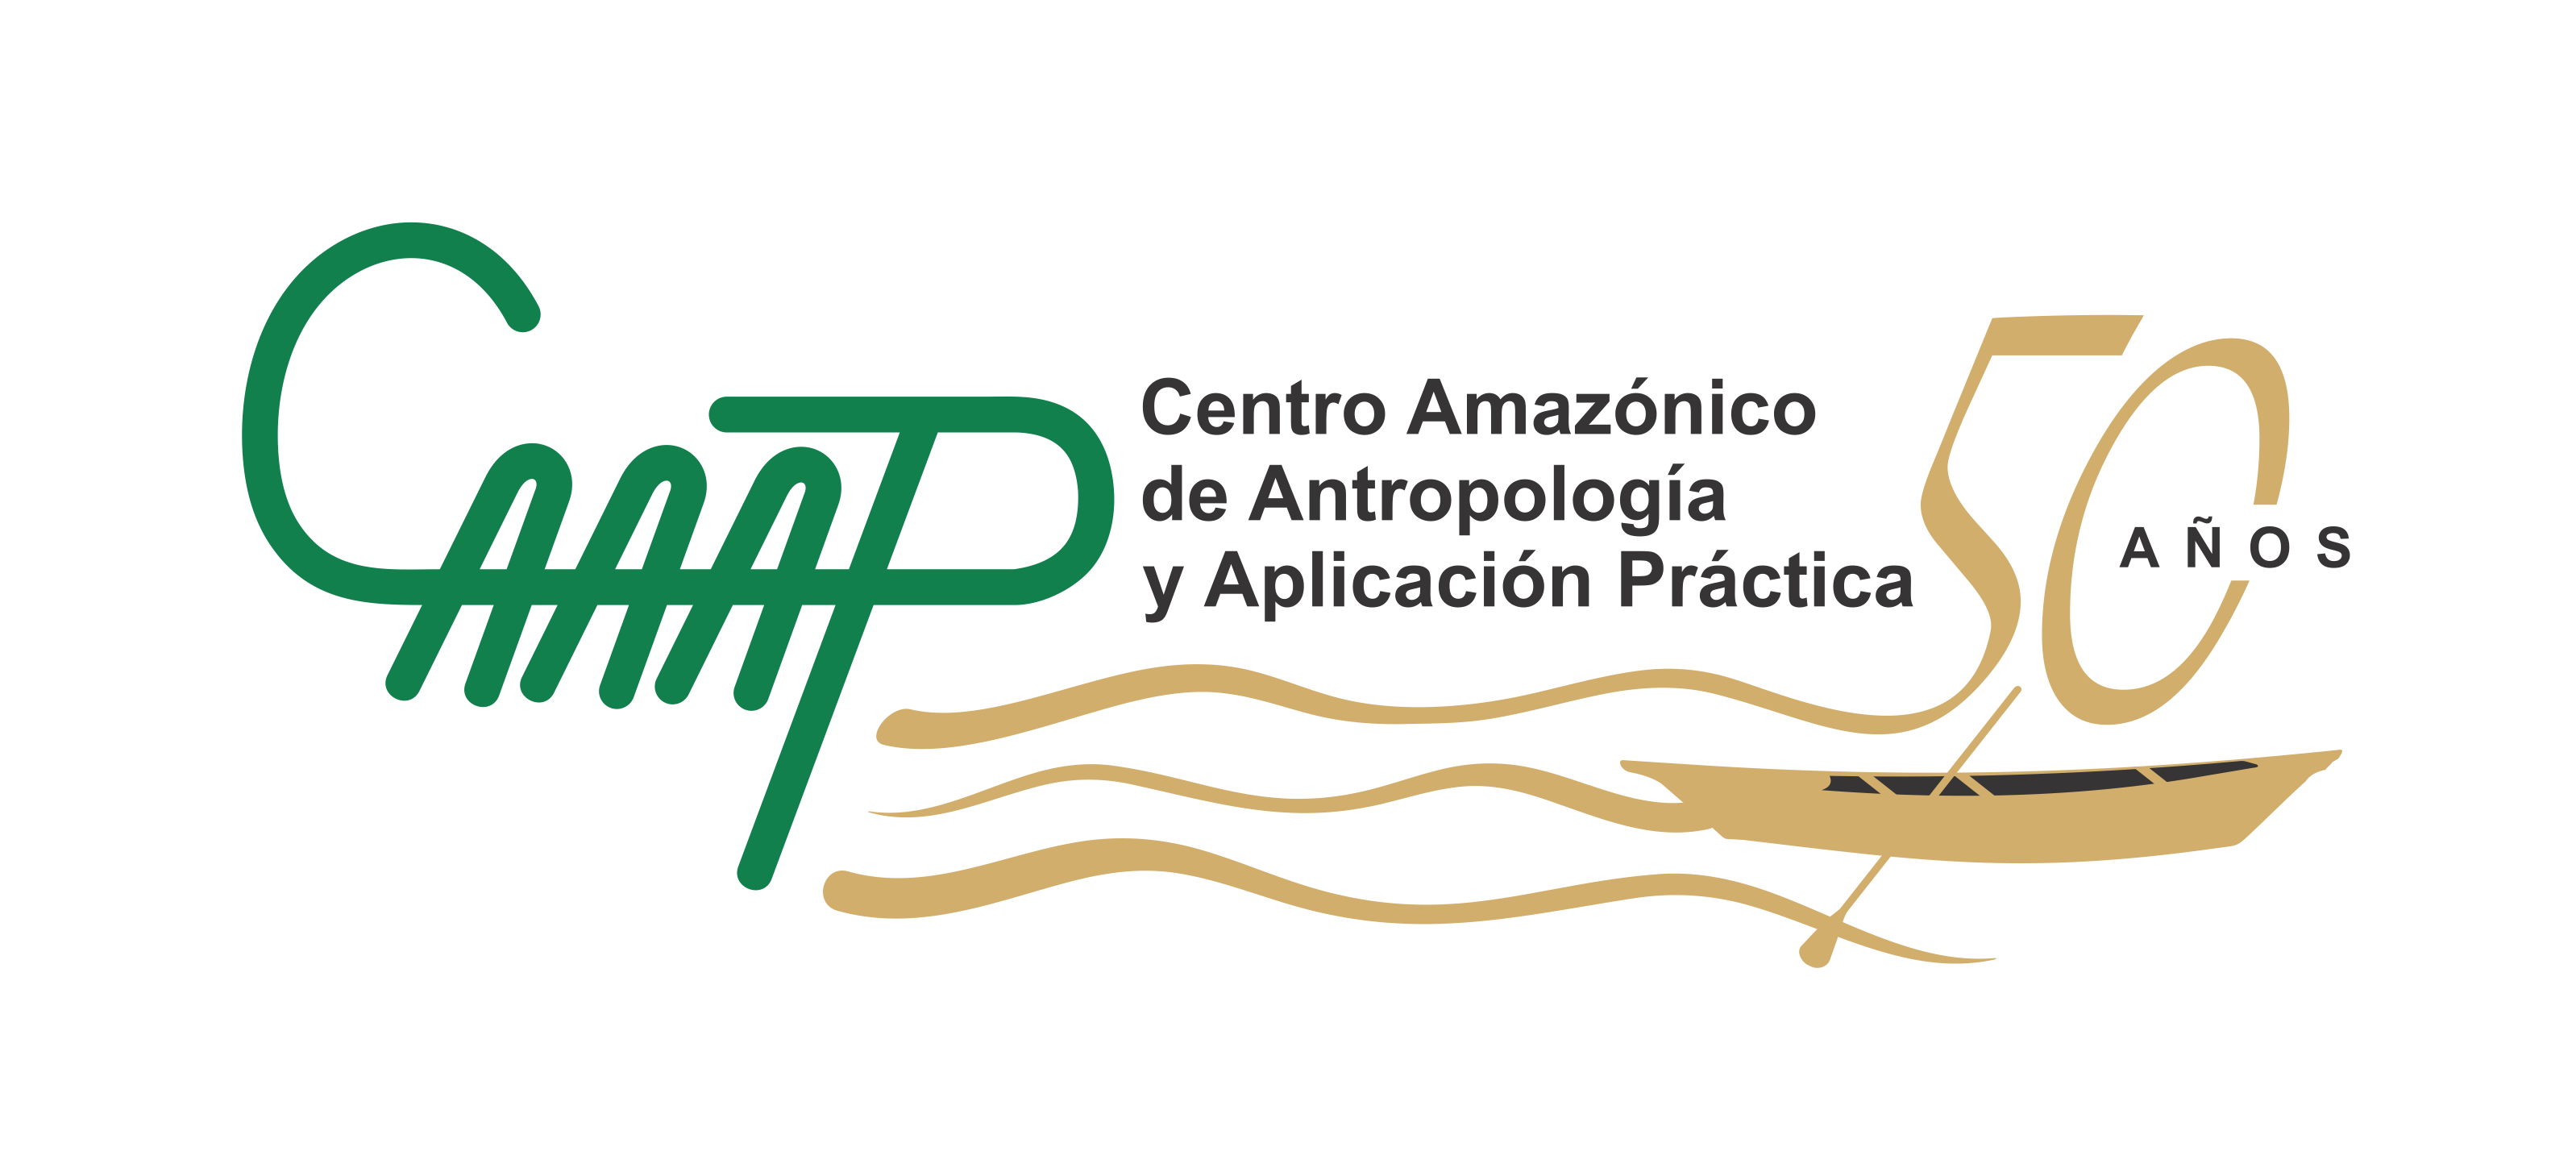 Centro Amazónico de Antropología y Aplicación Práctica (CAAAP)